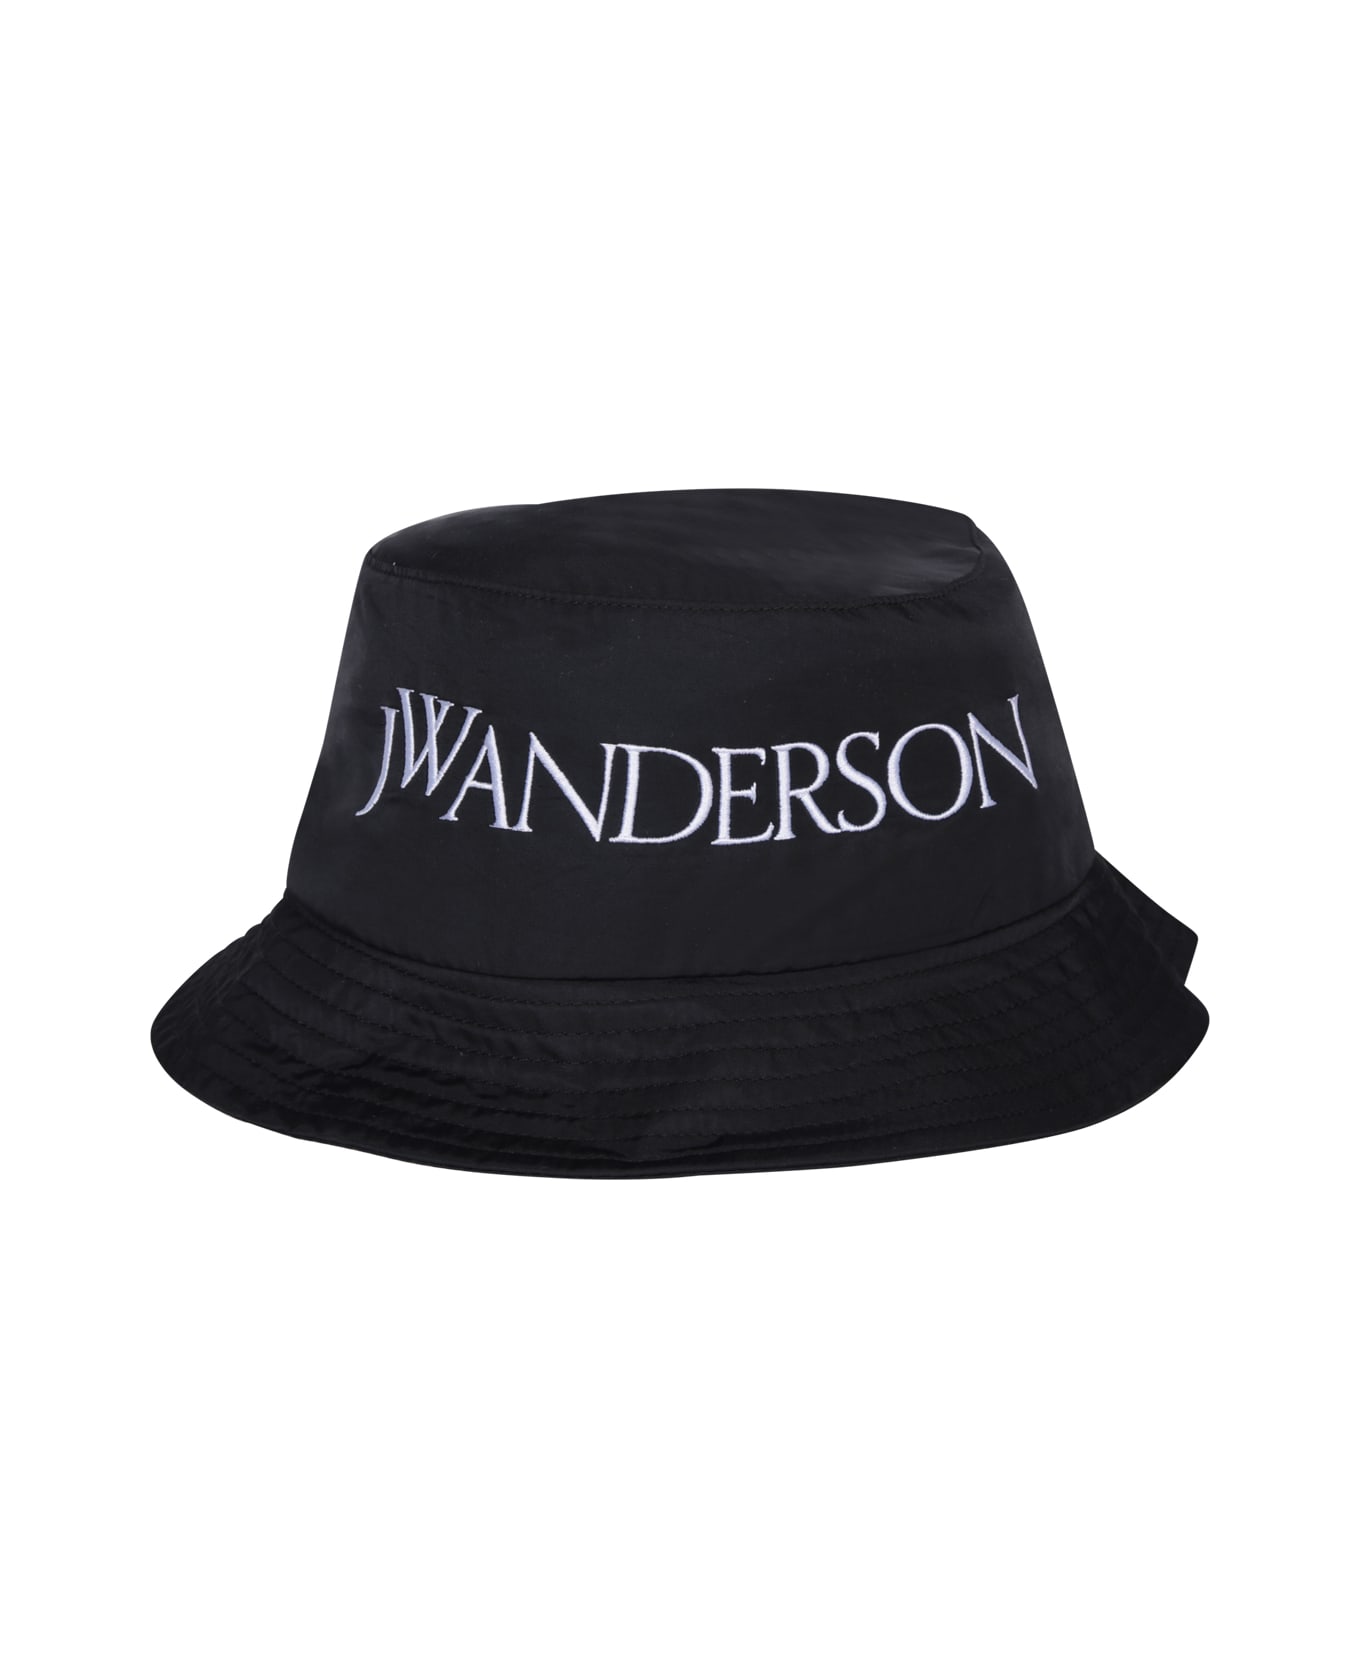 J.W. Anderson Black Nylon Blend Bucket Hat - Black 帽子